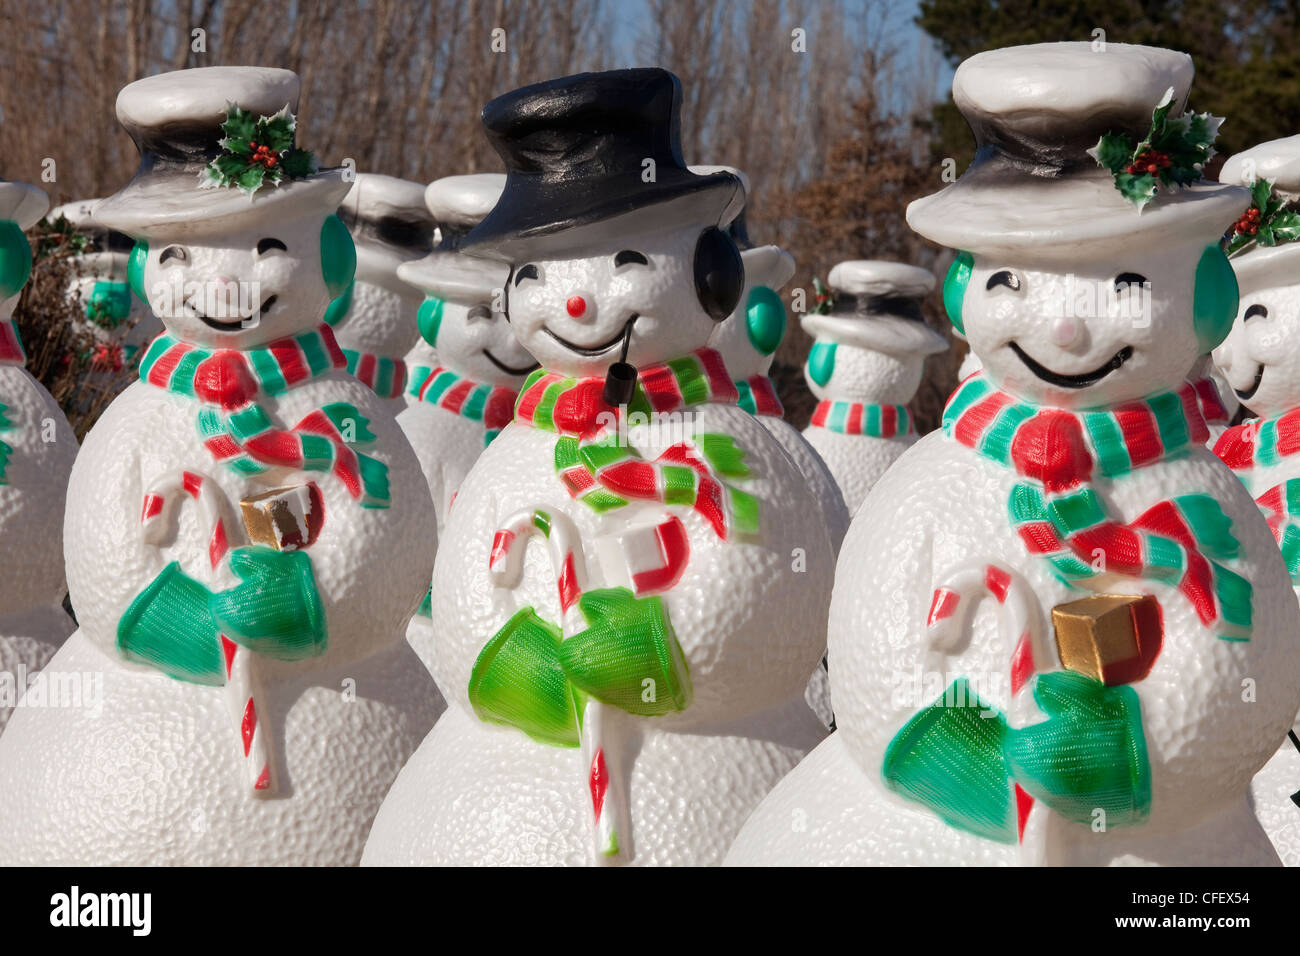 https://c8.alamy.com/comp/CFEX54/closeup-of-parade-of-snowmen-at-cornerstone-garden-sonoma-california-CFEX54.jpg